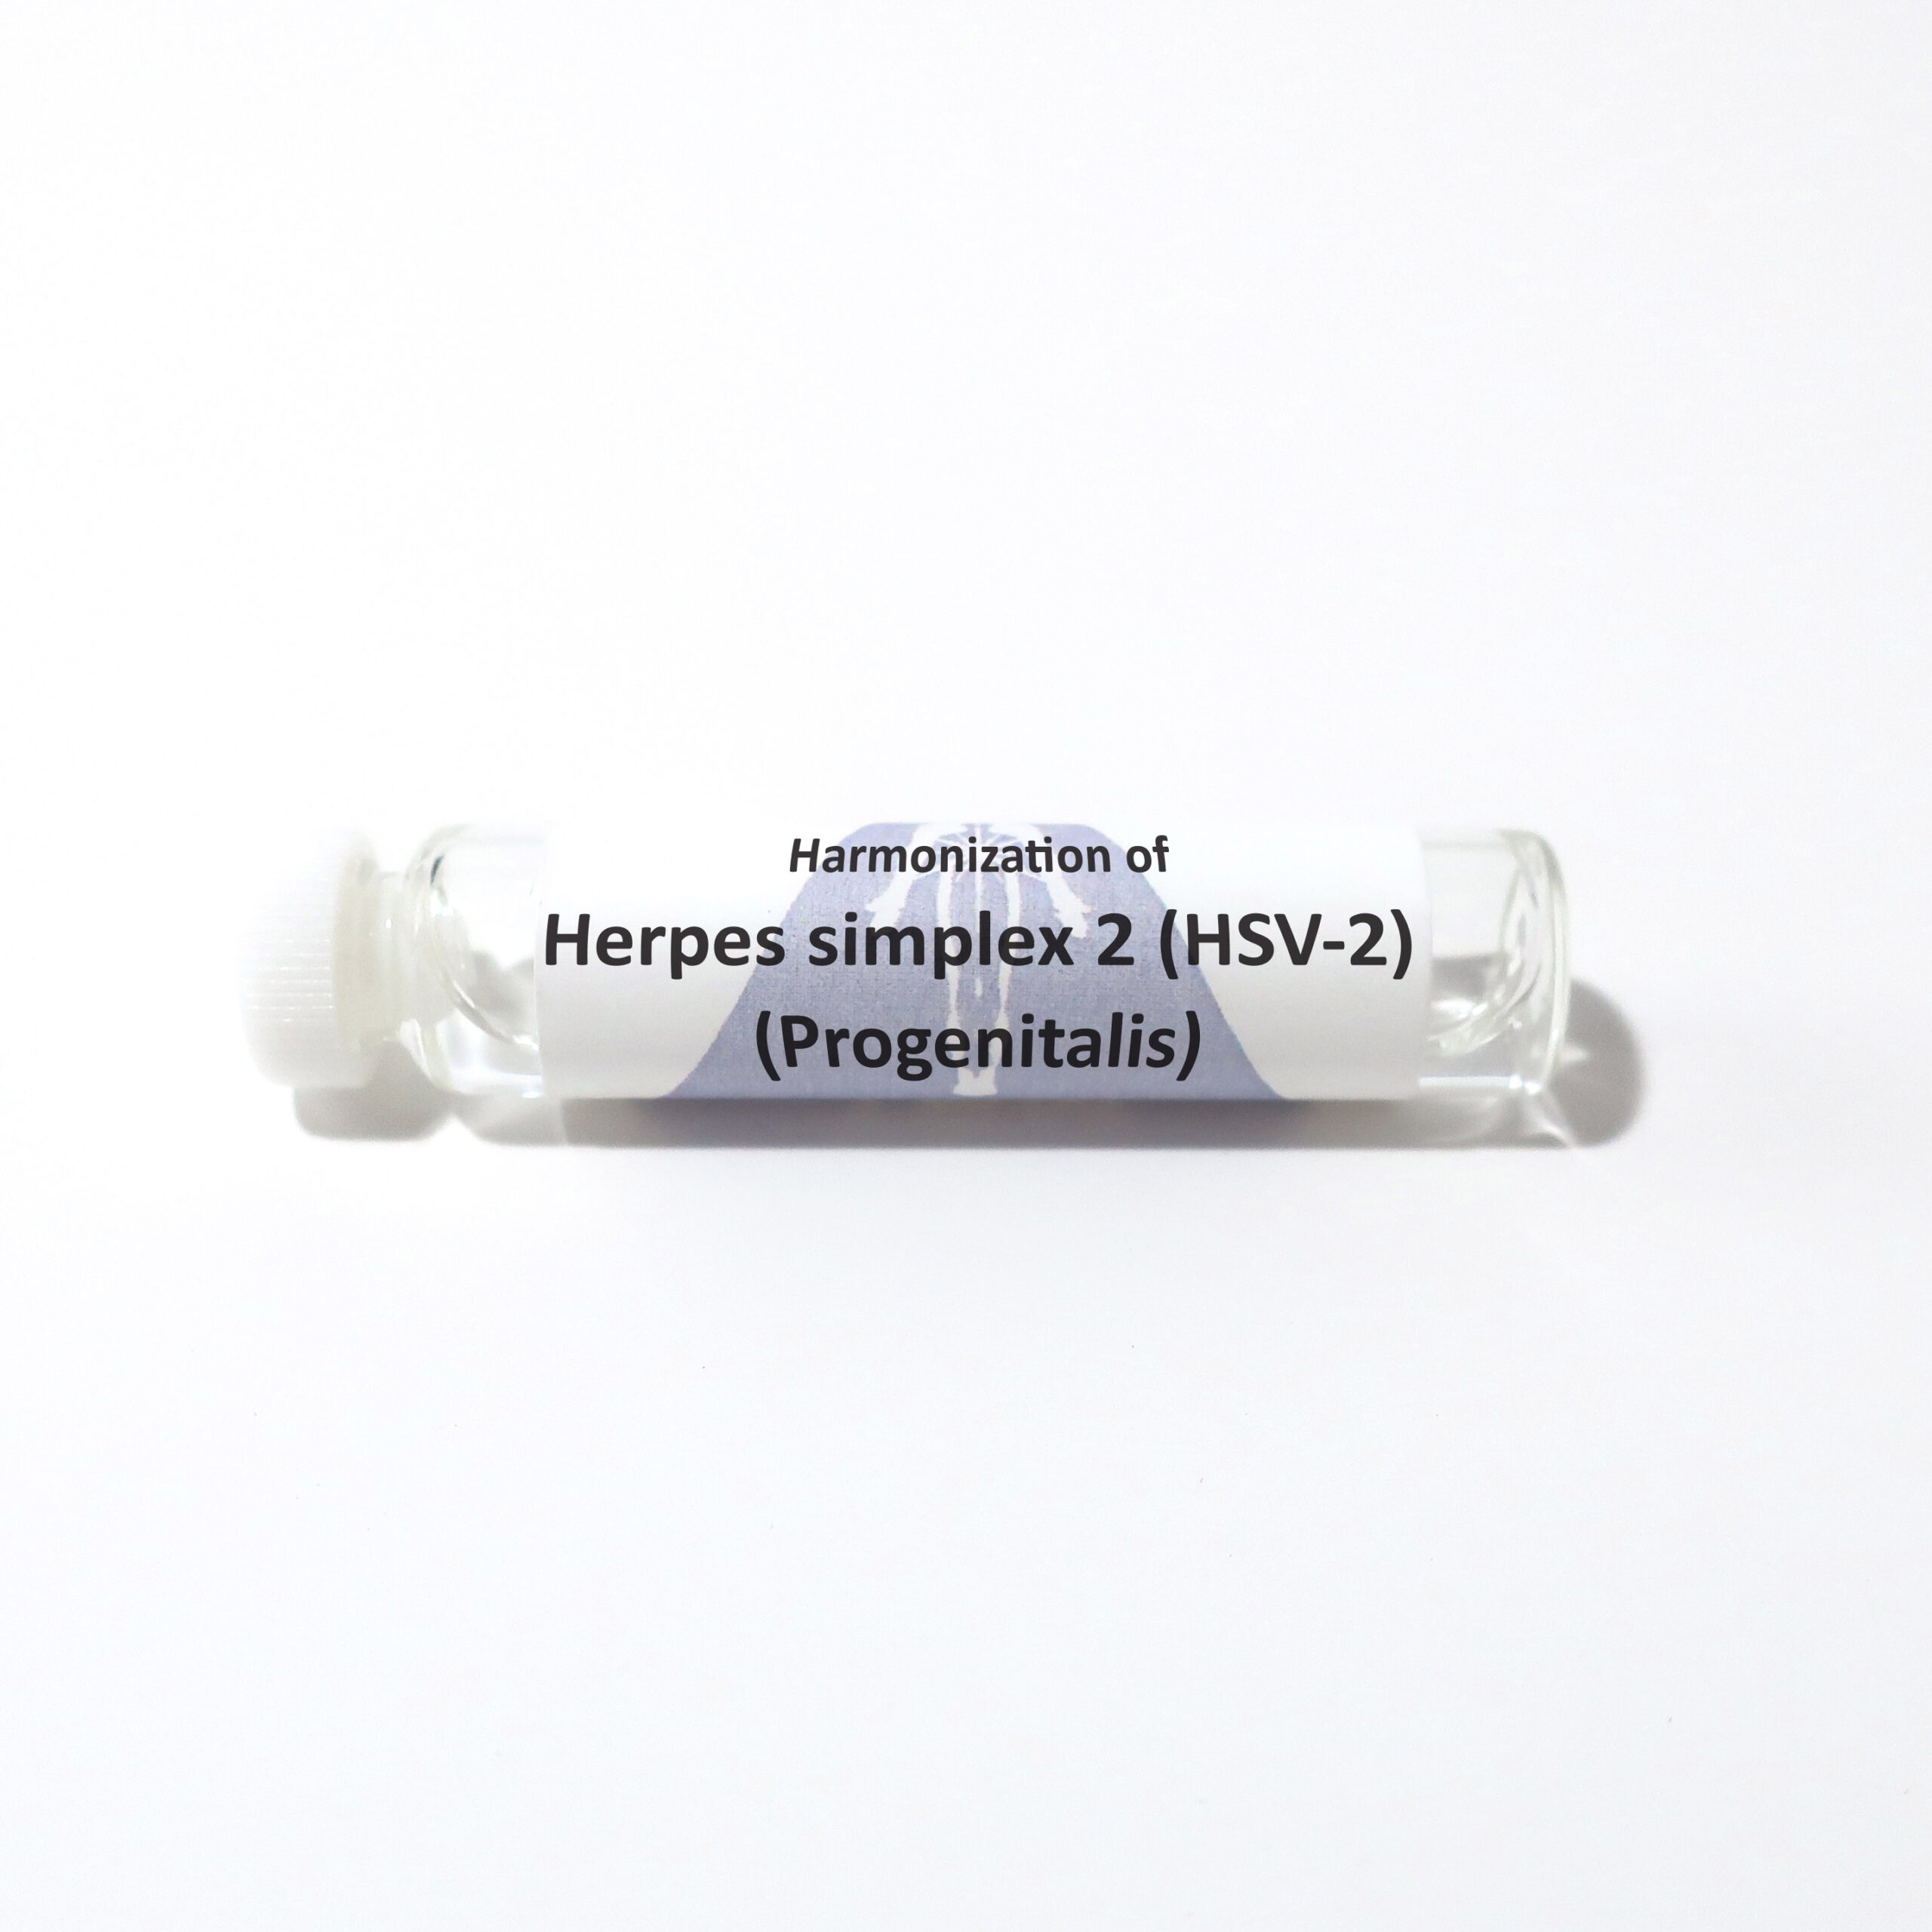 Herpes simplex 2 (HSV-2) (Progenitalis)